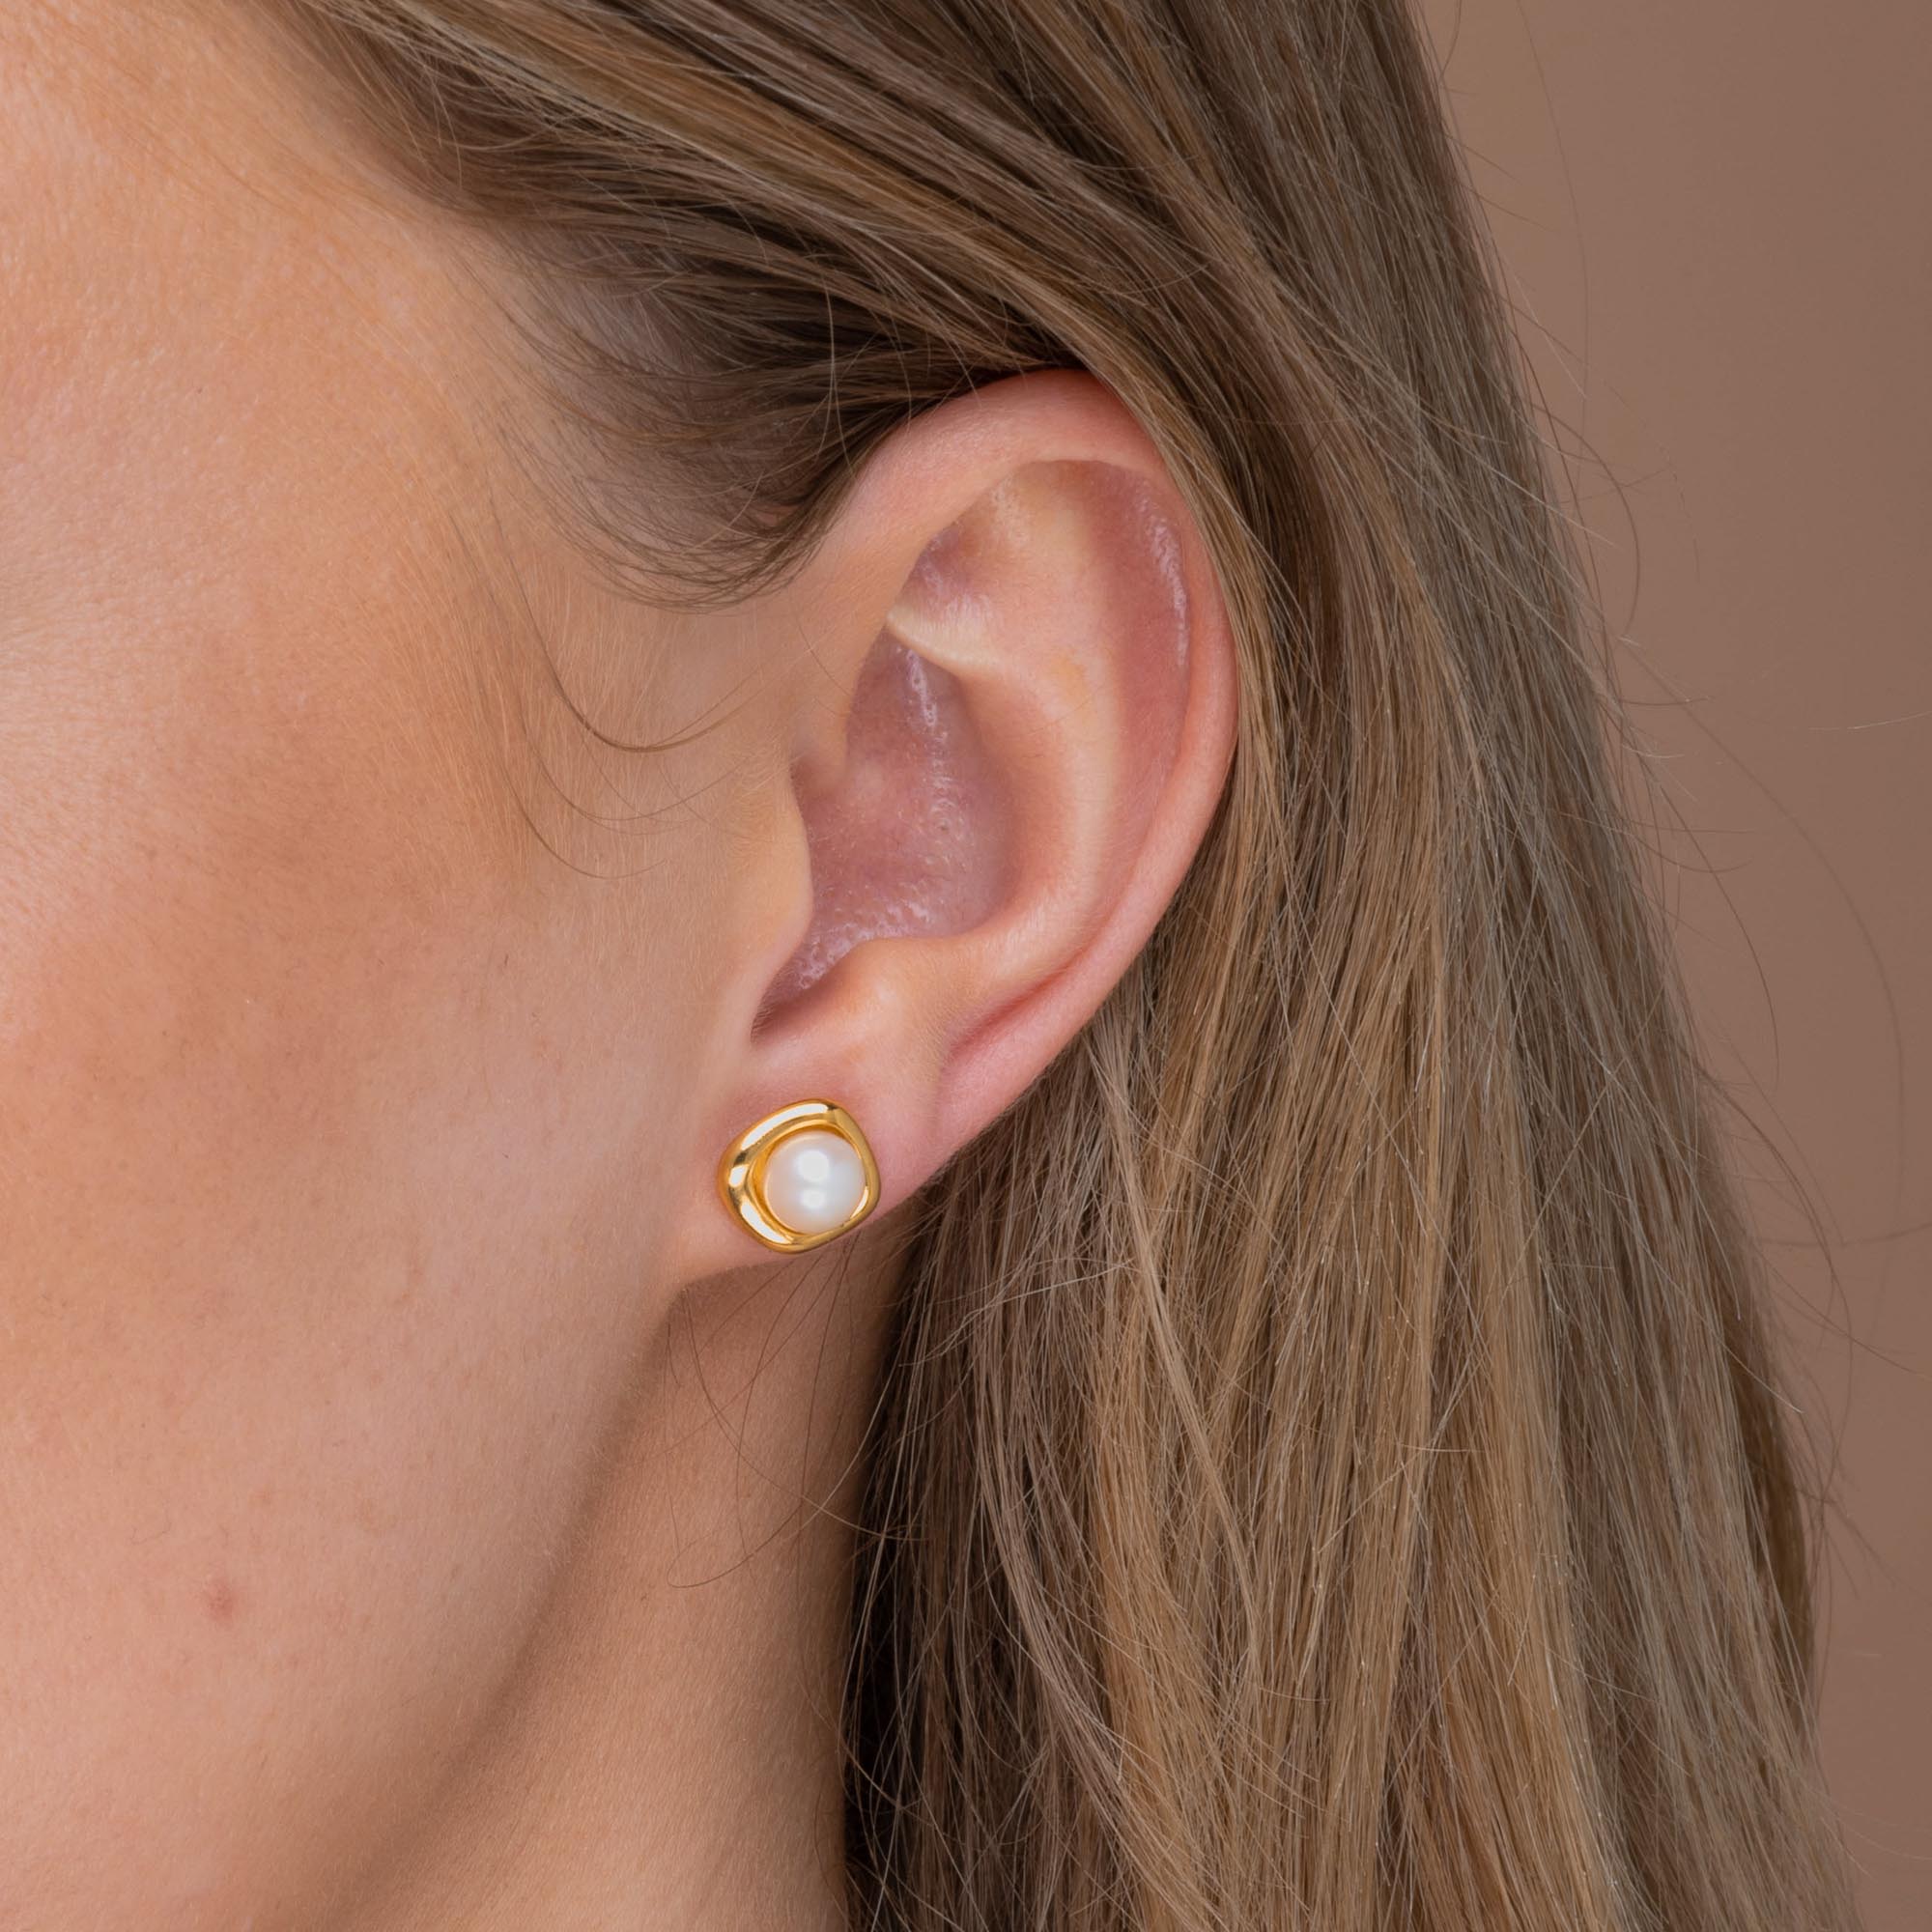 Pearl Halo Stud Earrings